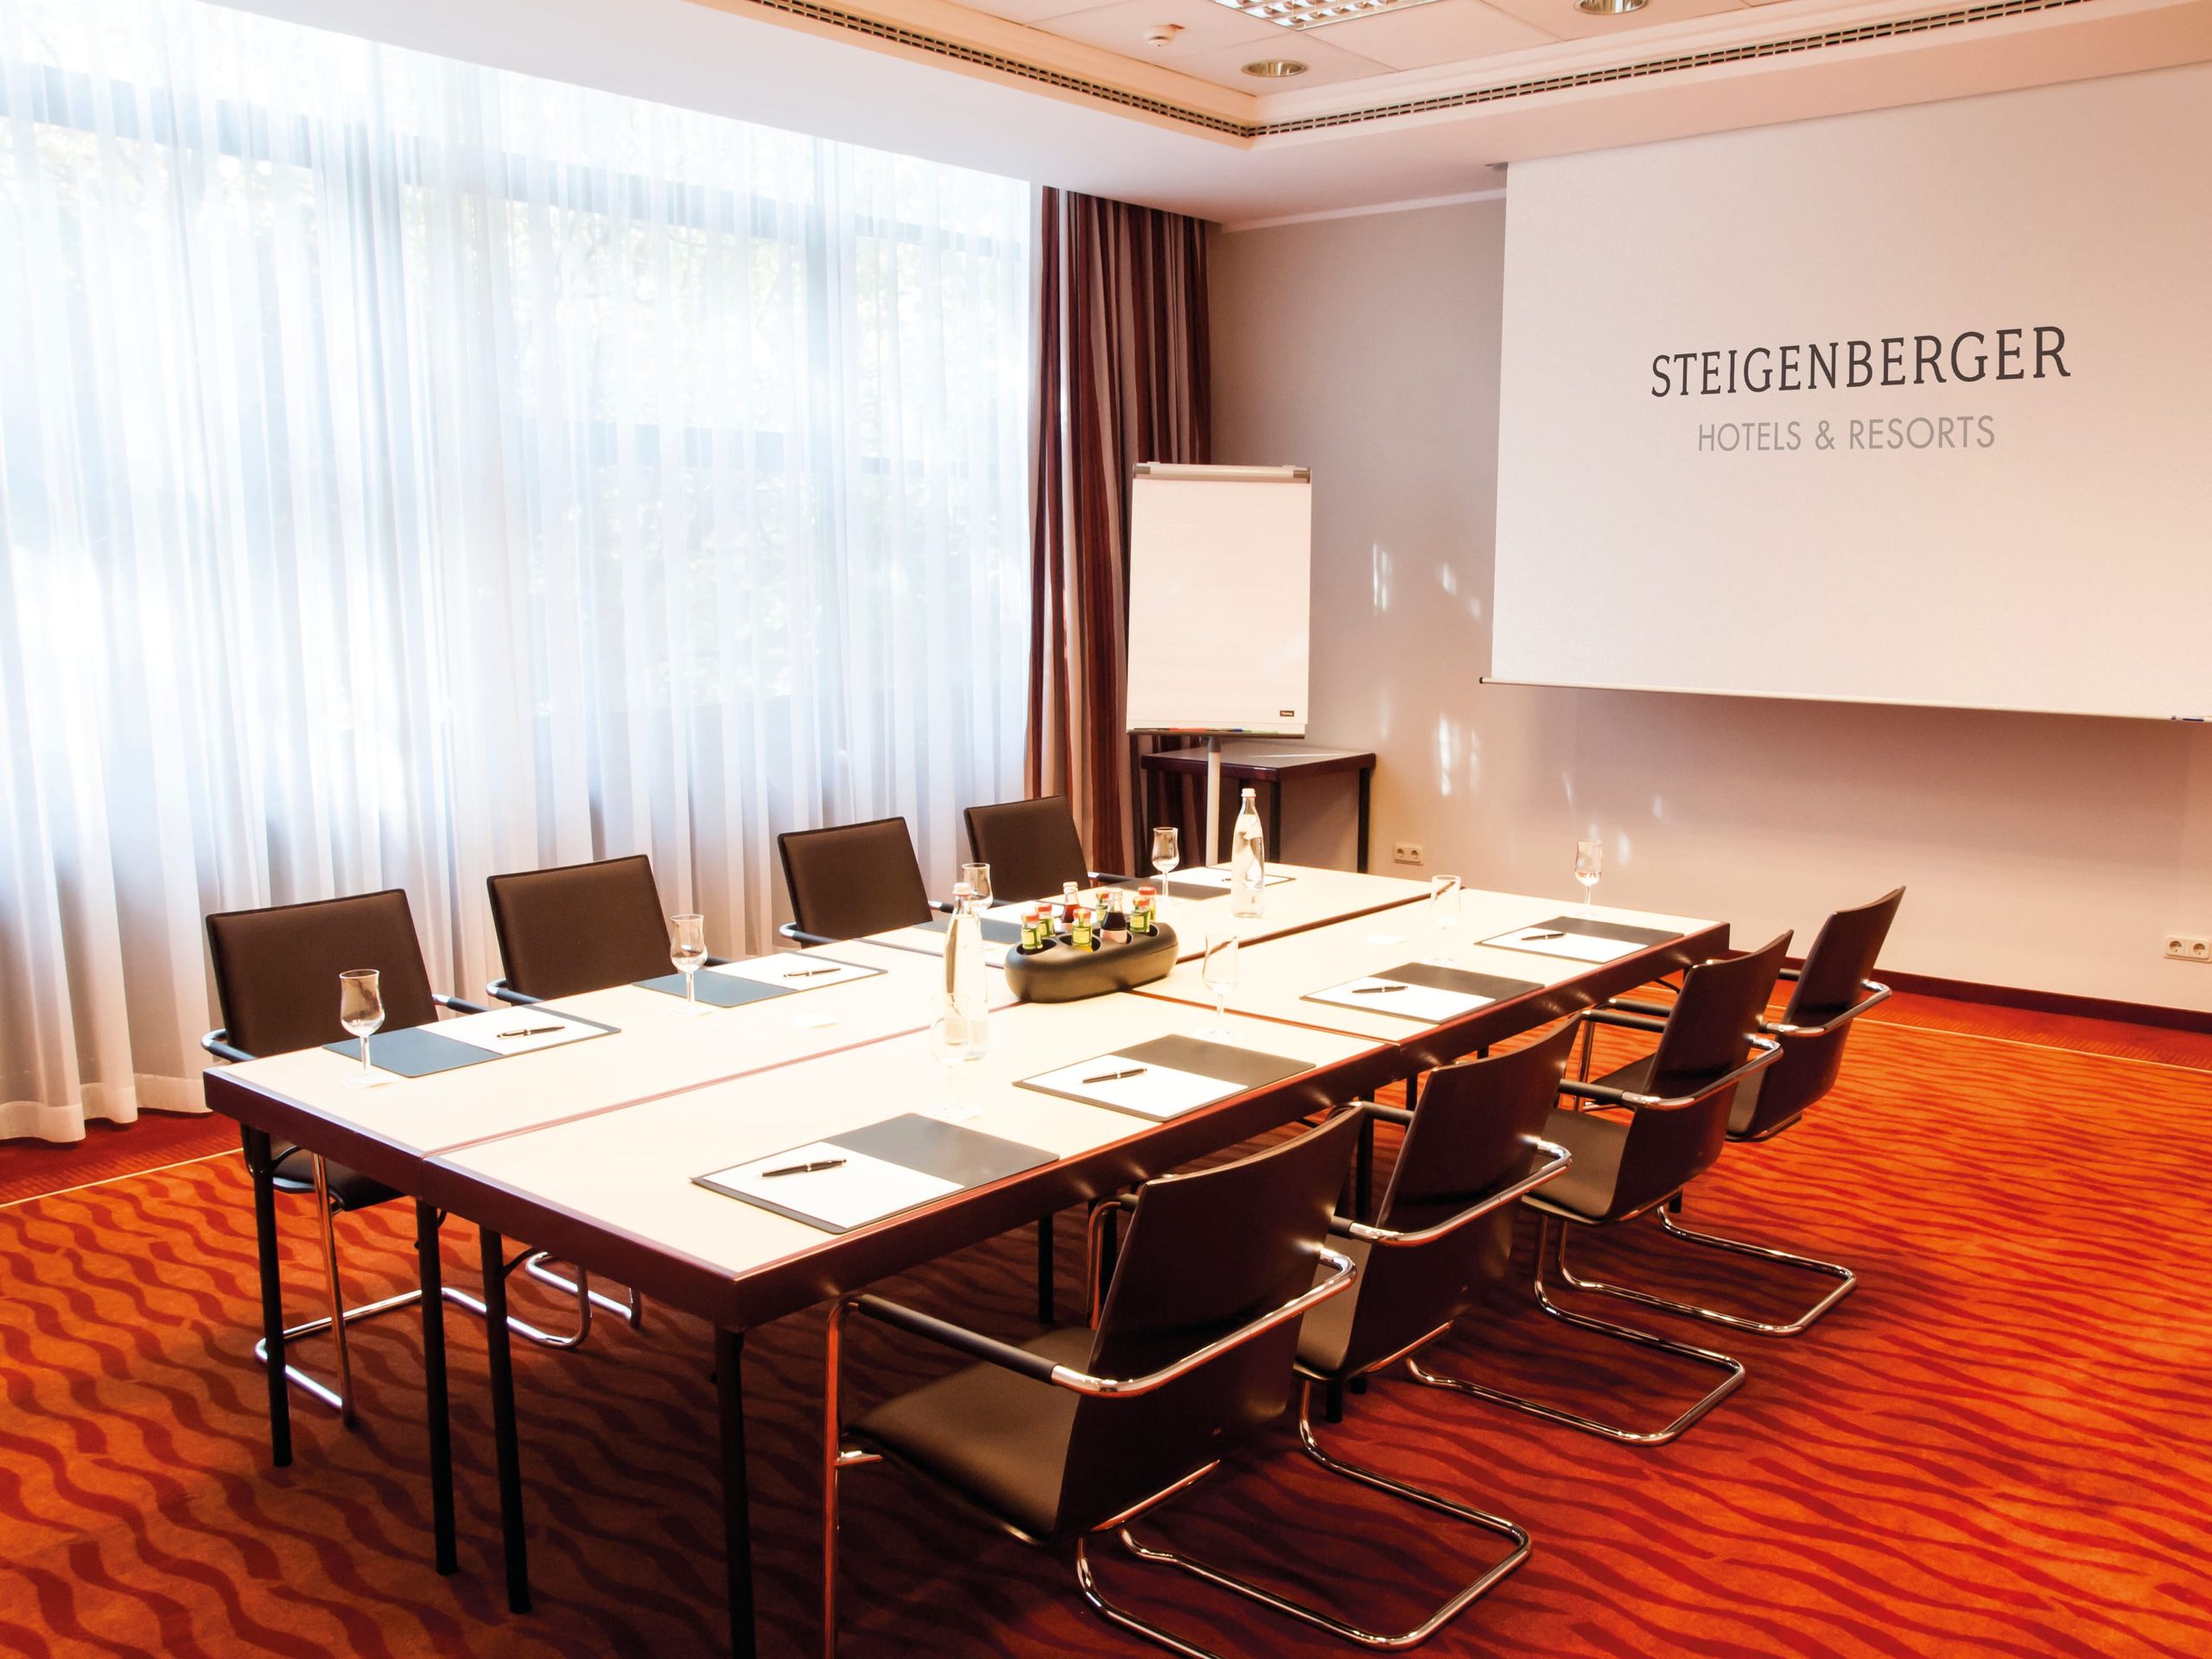 Steigenberger Hotel Dortmund - Meeting